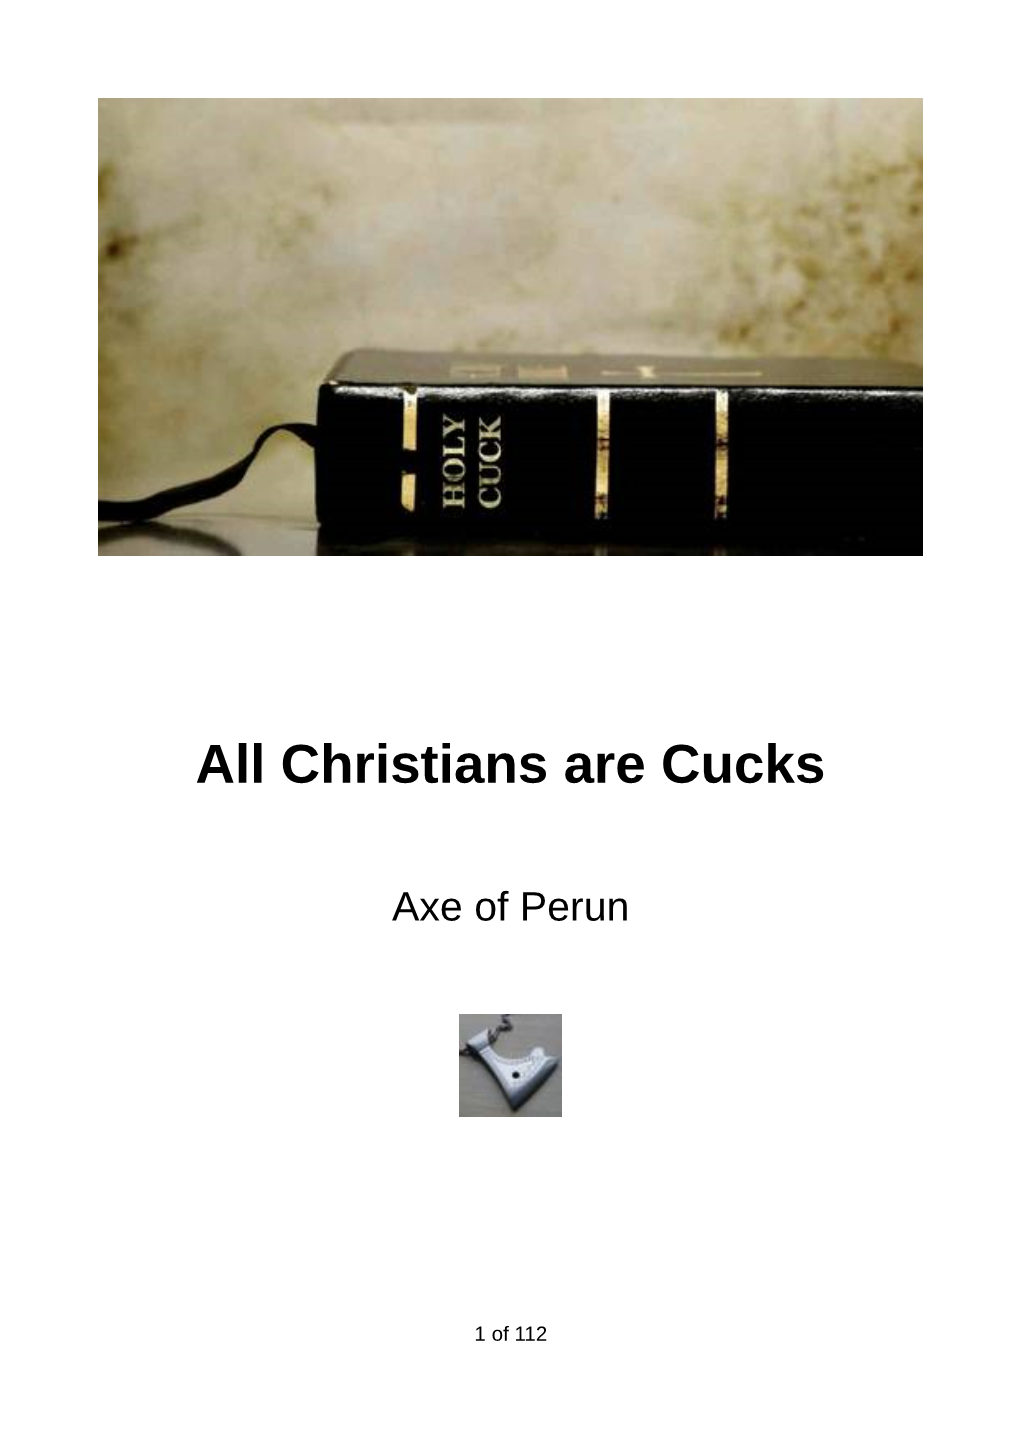 Christians Are Cucks